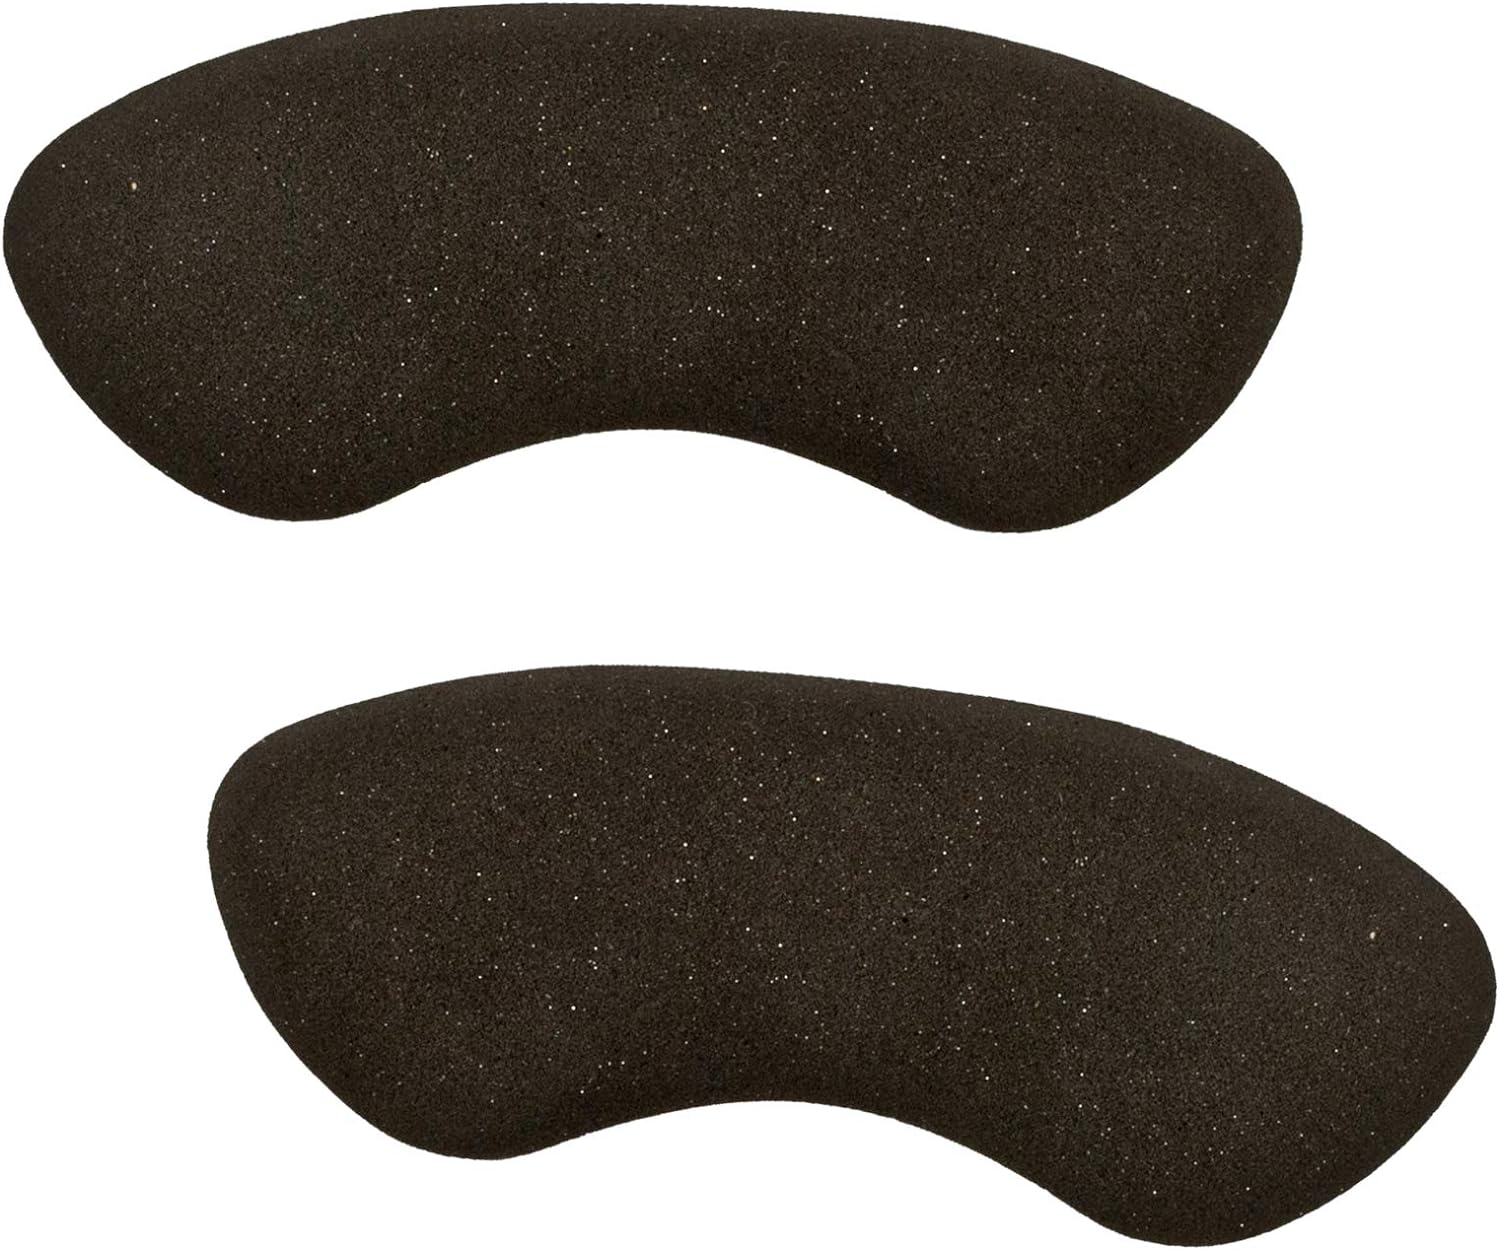 Braza Heel Grip Cushions - Comfortable Shoe Insert Pads - 1 Pair